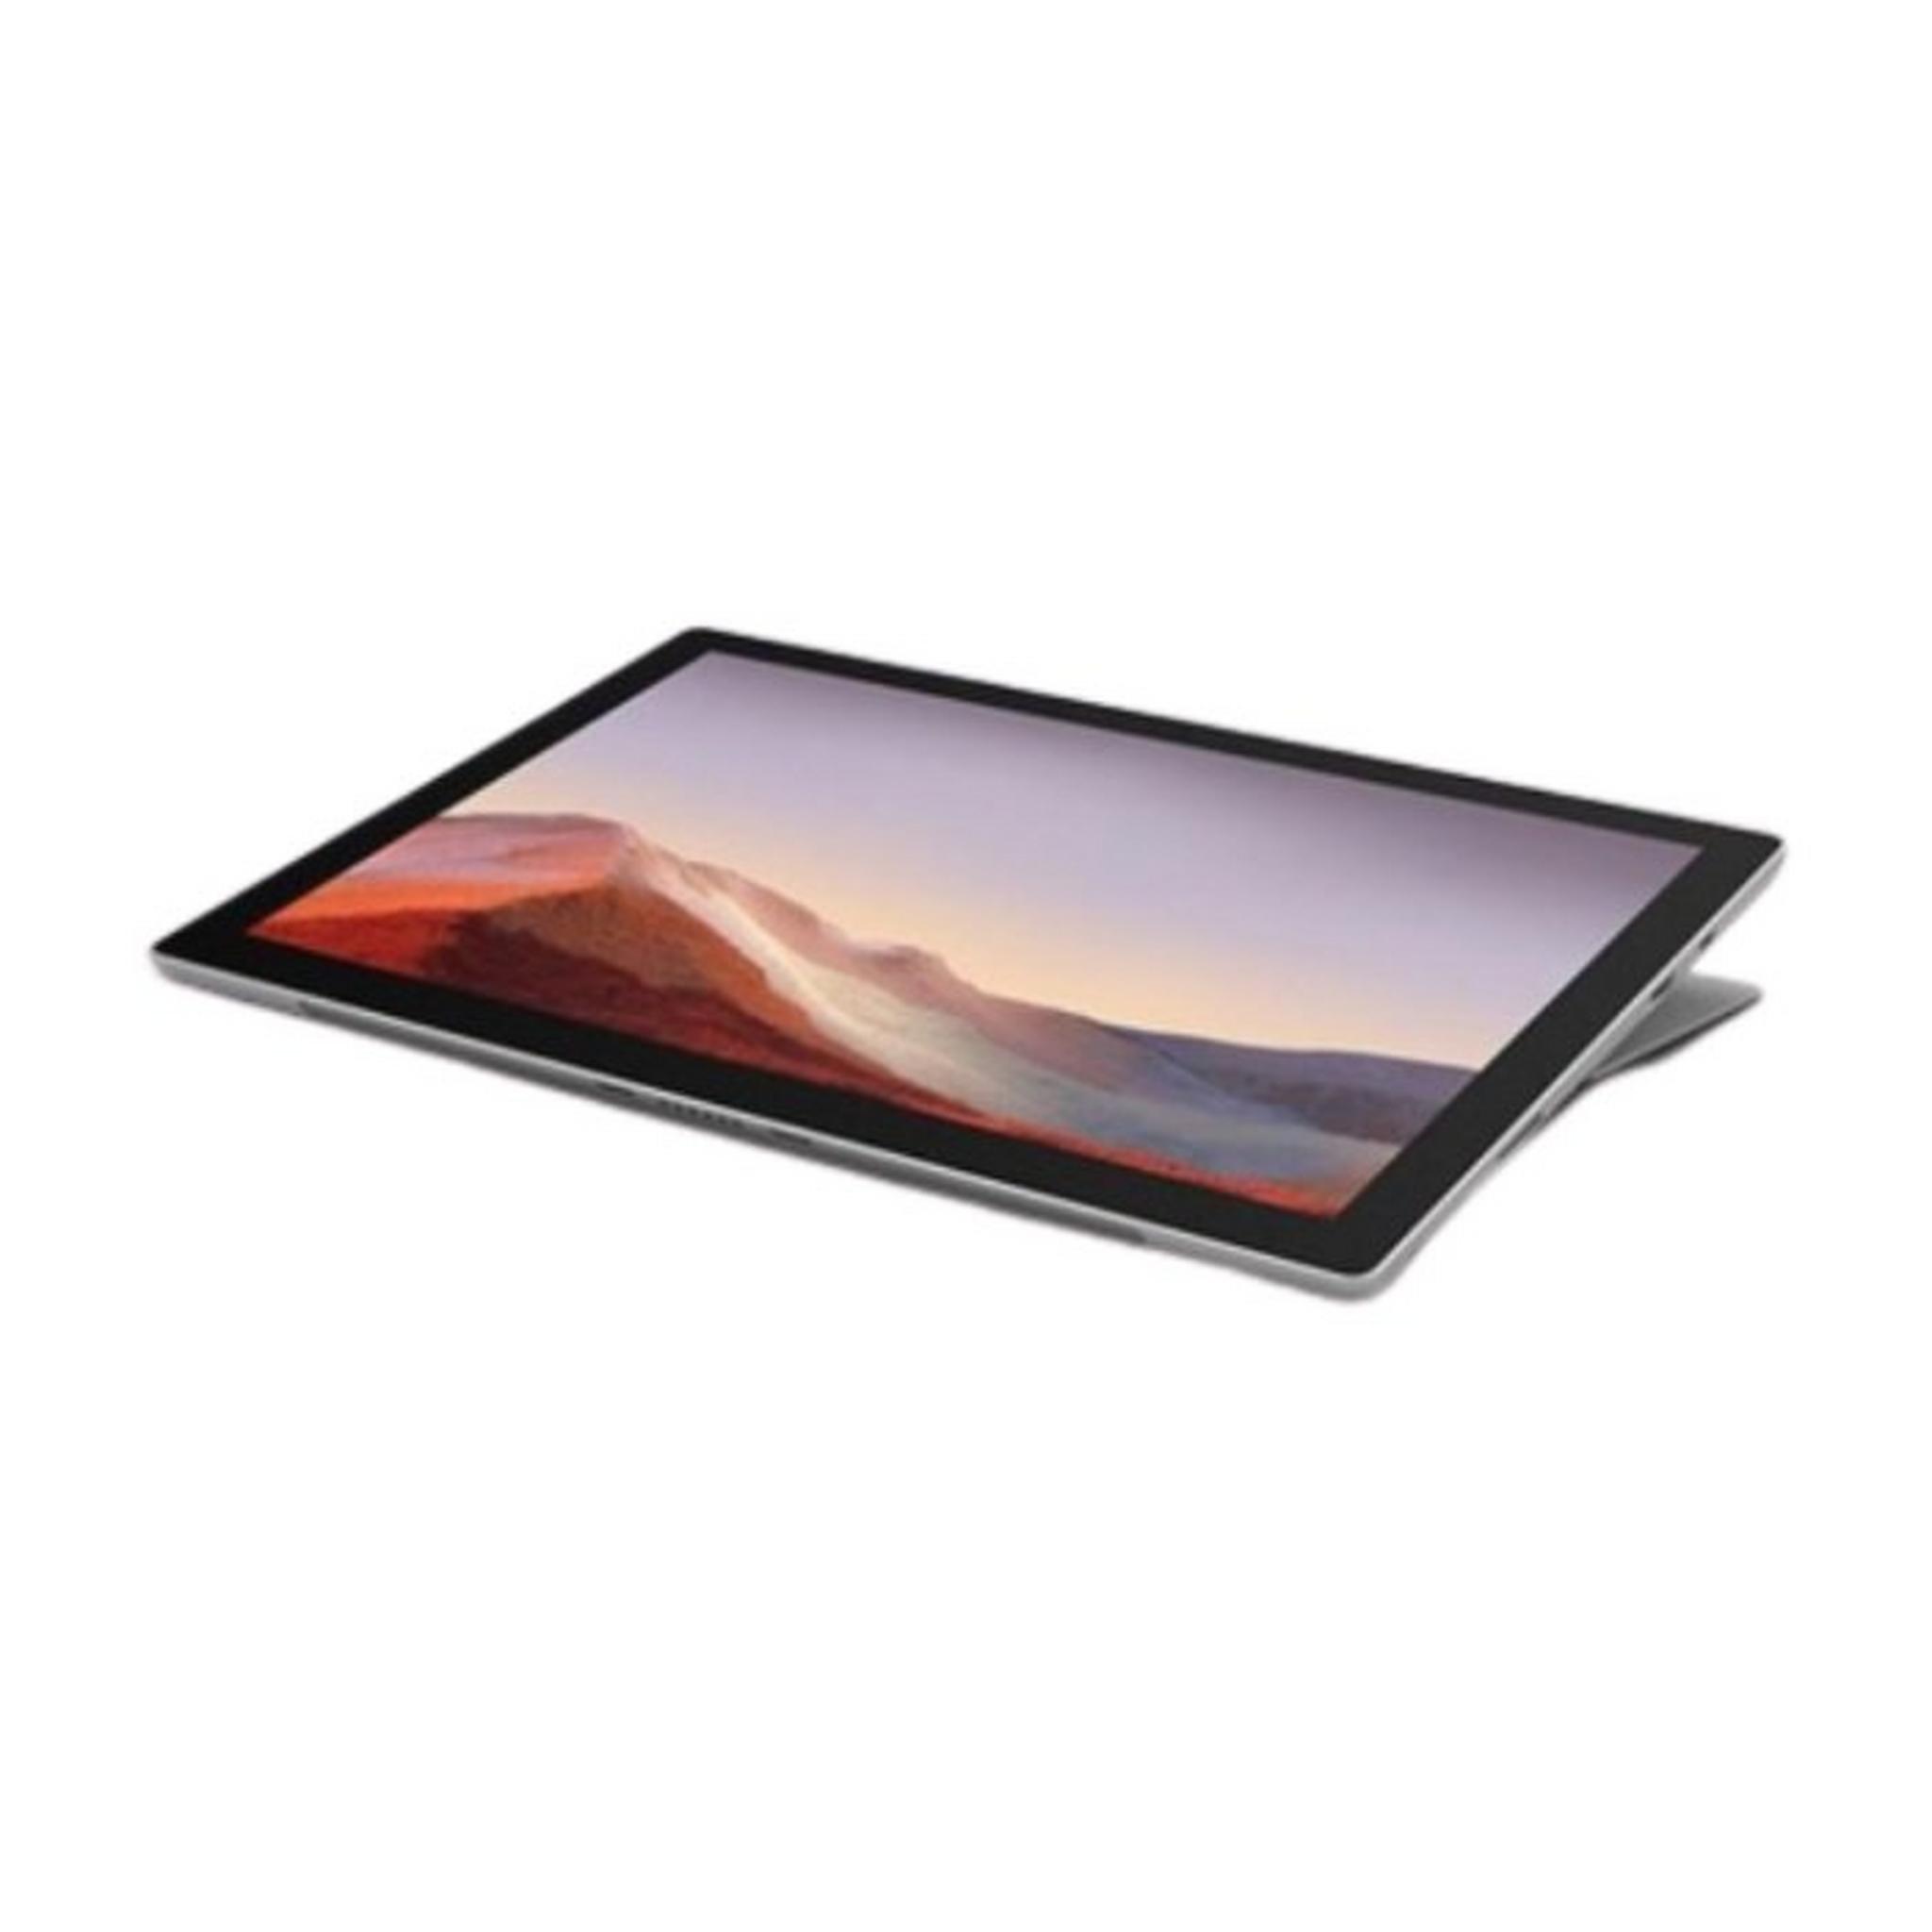 Microsoft Surface Pro 7 Core i5 8GB RAM 256GB SSD 12.3-inch Convertible Laptop - Platinum